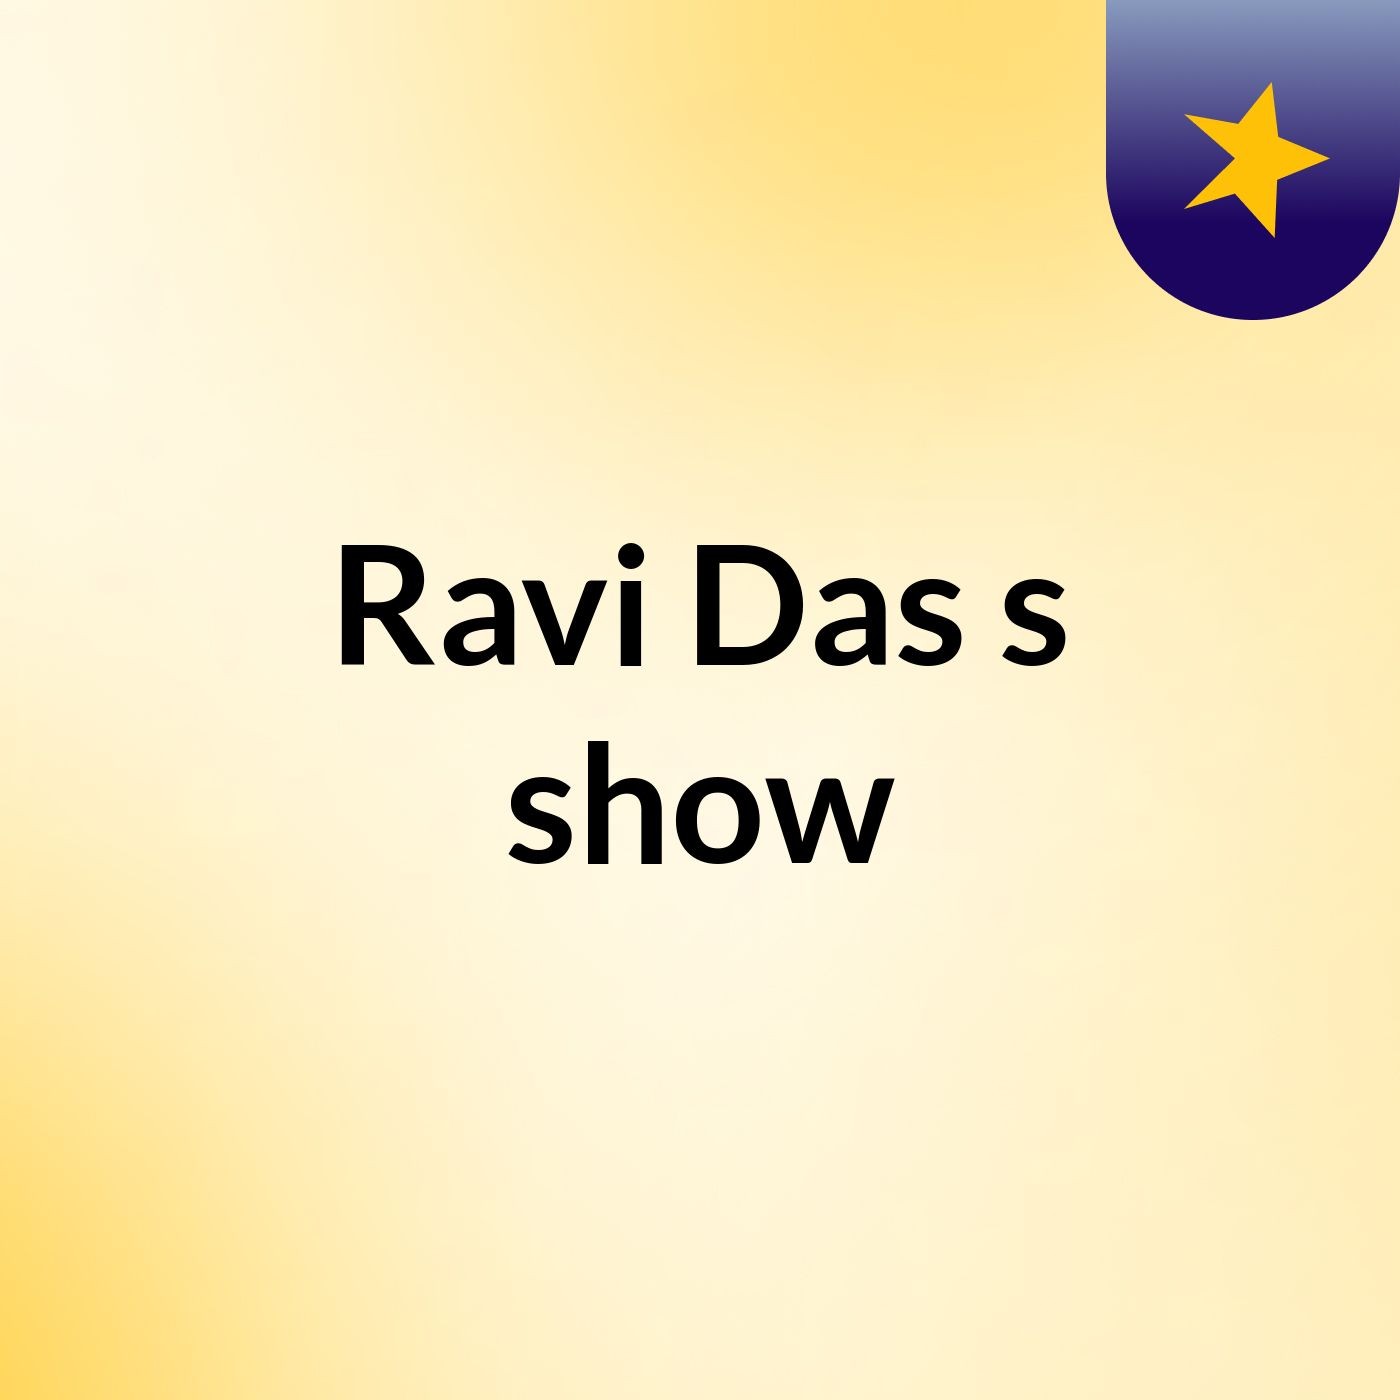 Ravi Das's show